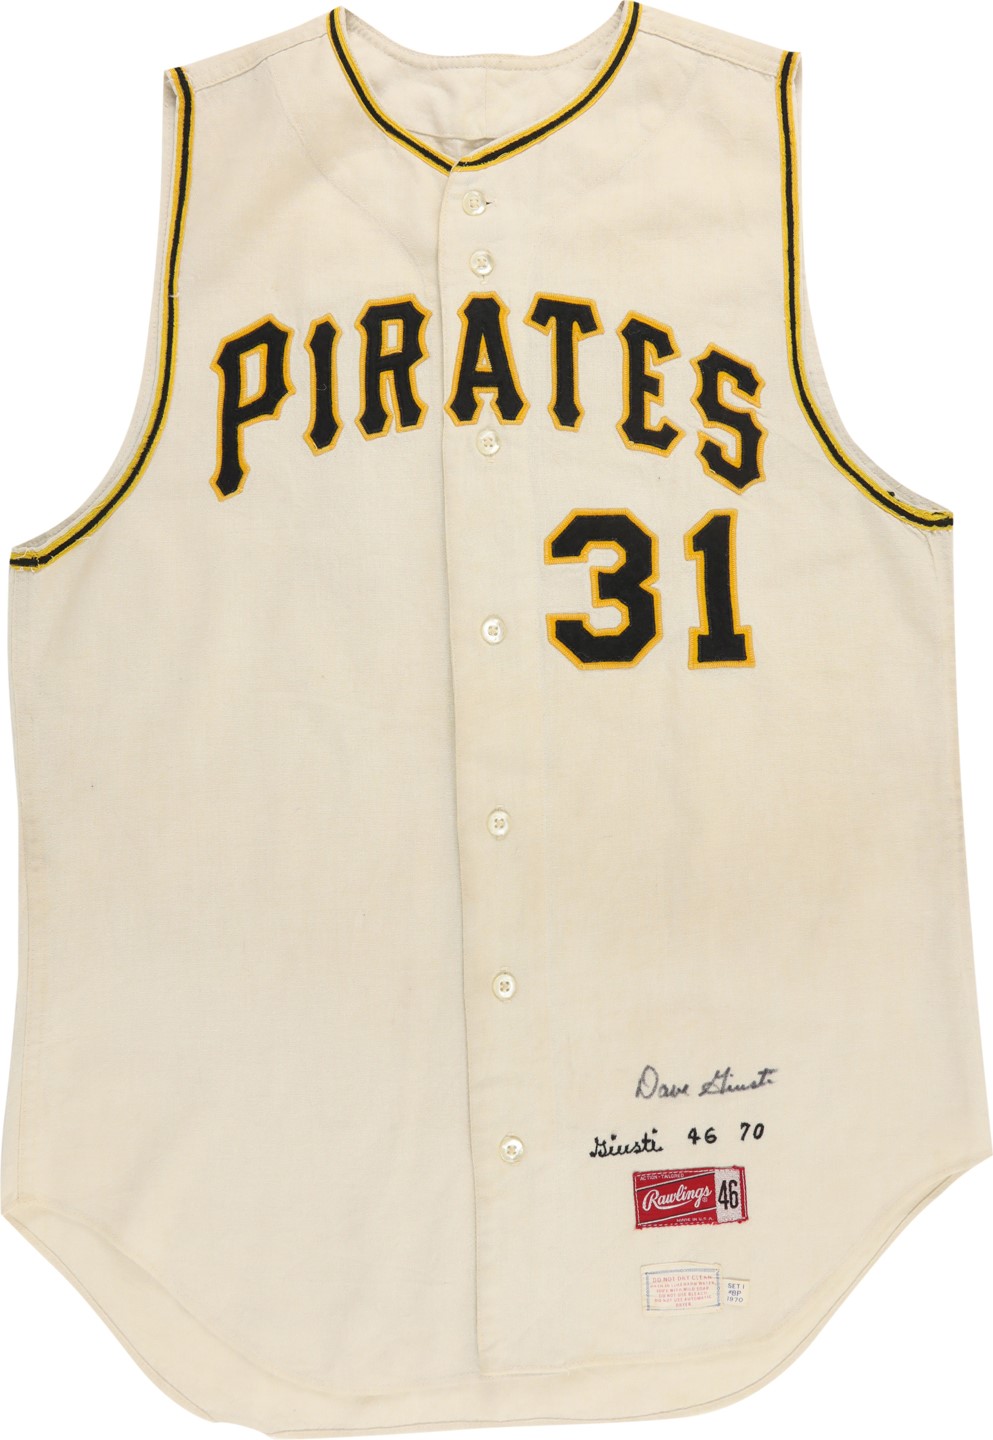 - 1970 Dave Giusti Pittsburgh Pirates Game Worn Jersey